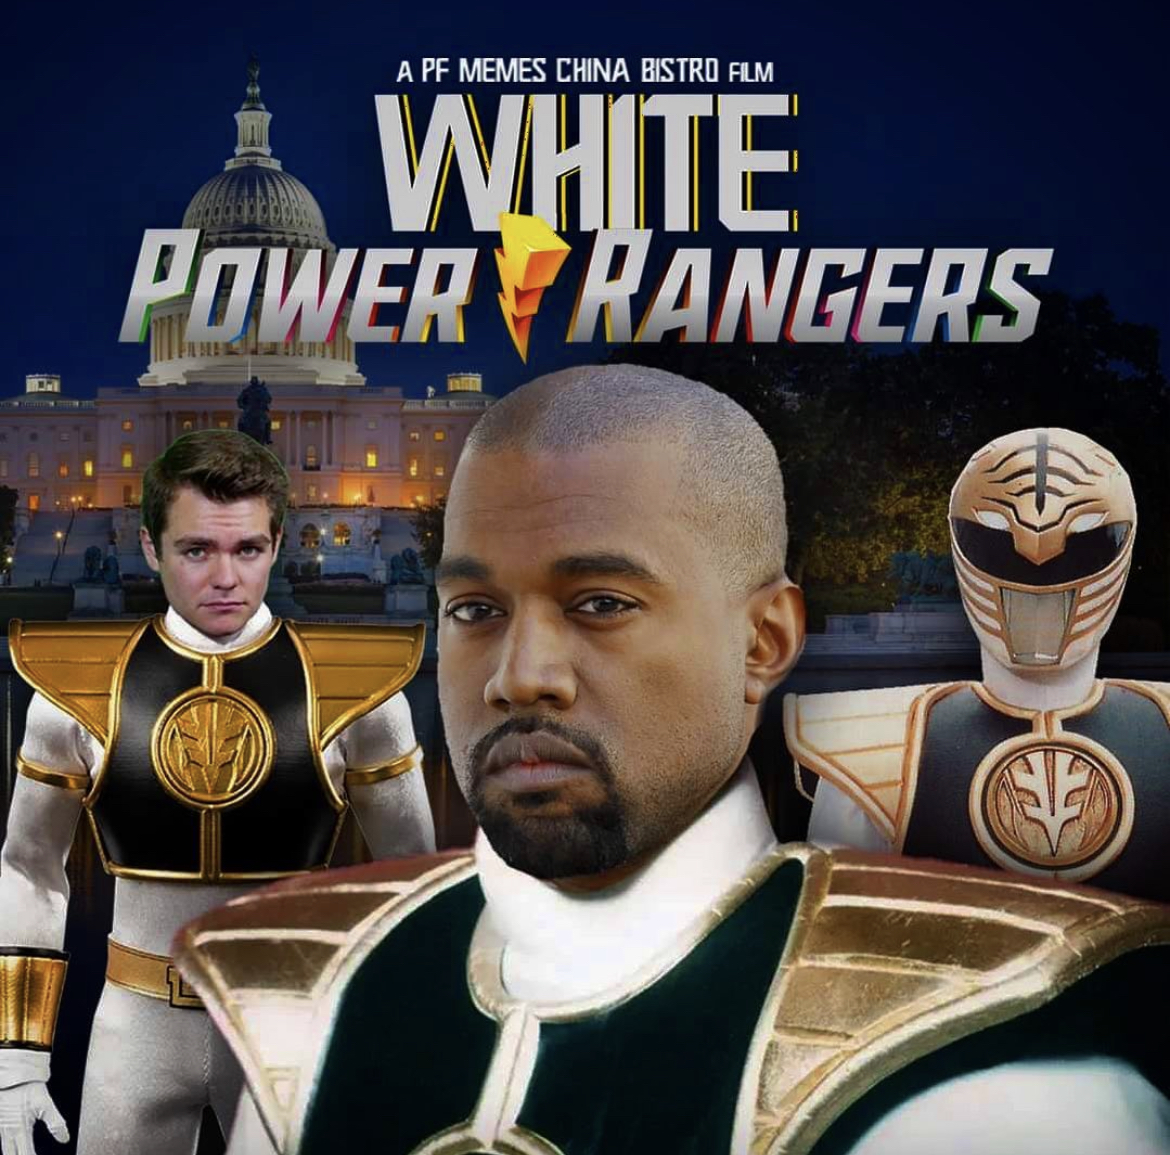 PFMemesChinaBistro Memes - universal orlando resort - A Pf Memes China Bistro Film White Power Rangers